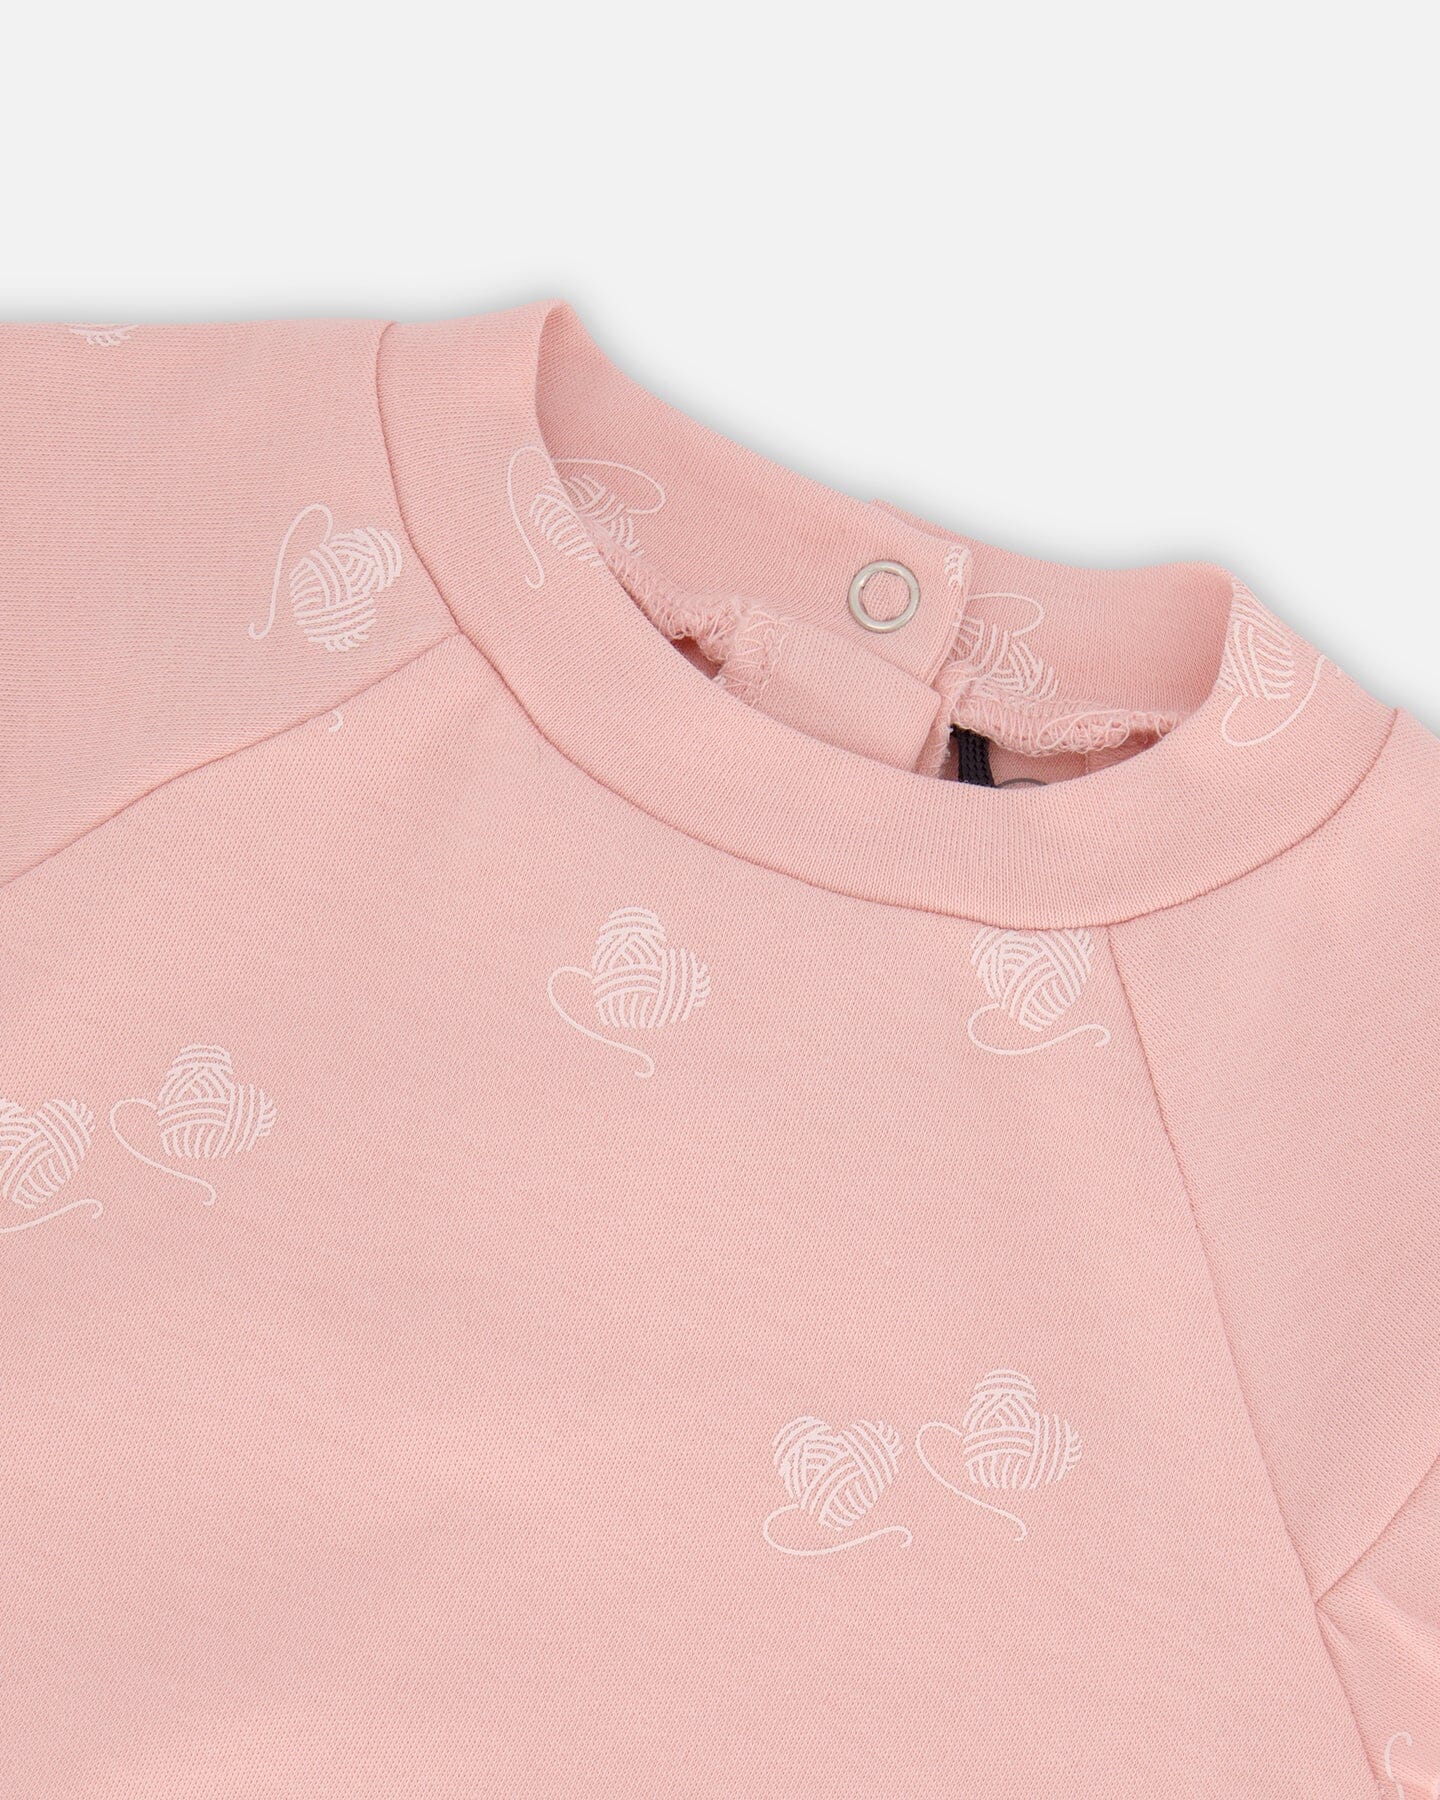 Organic Cotton Printed Top And Pants Set Powder Pink Little Heart Of Wool Sets Deux par Deux 